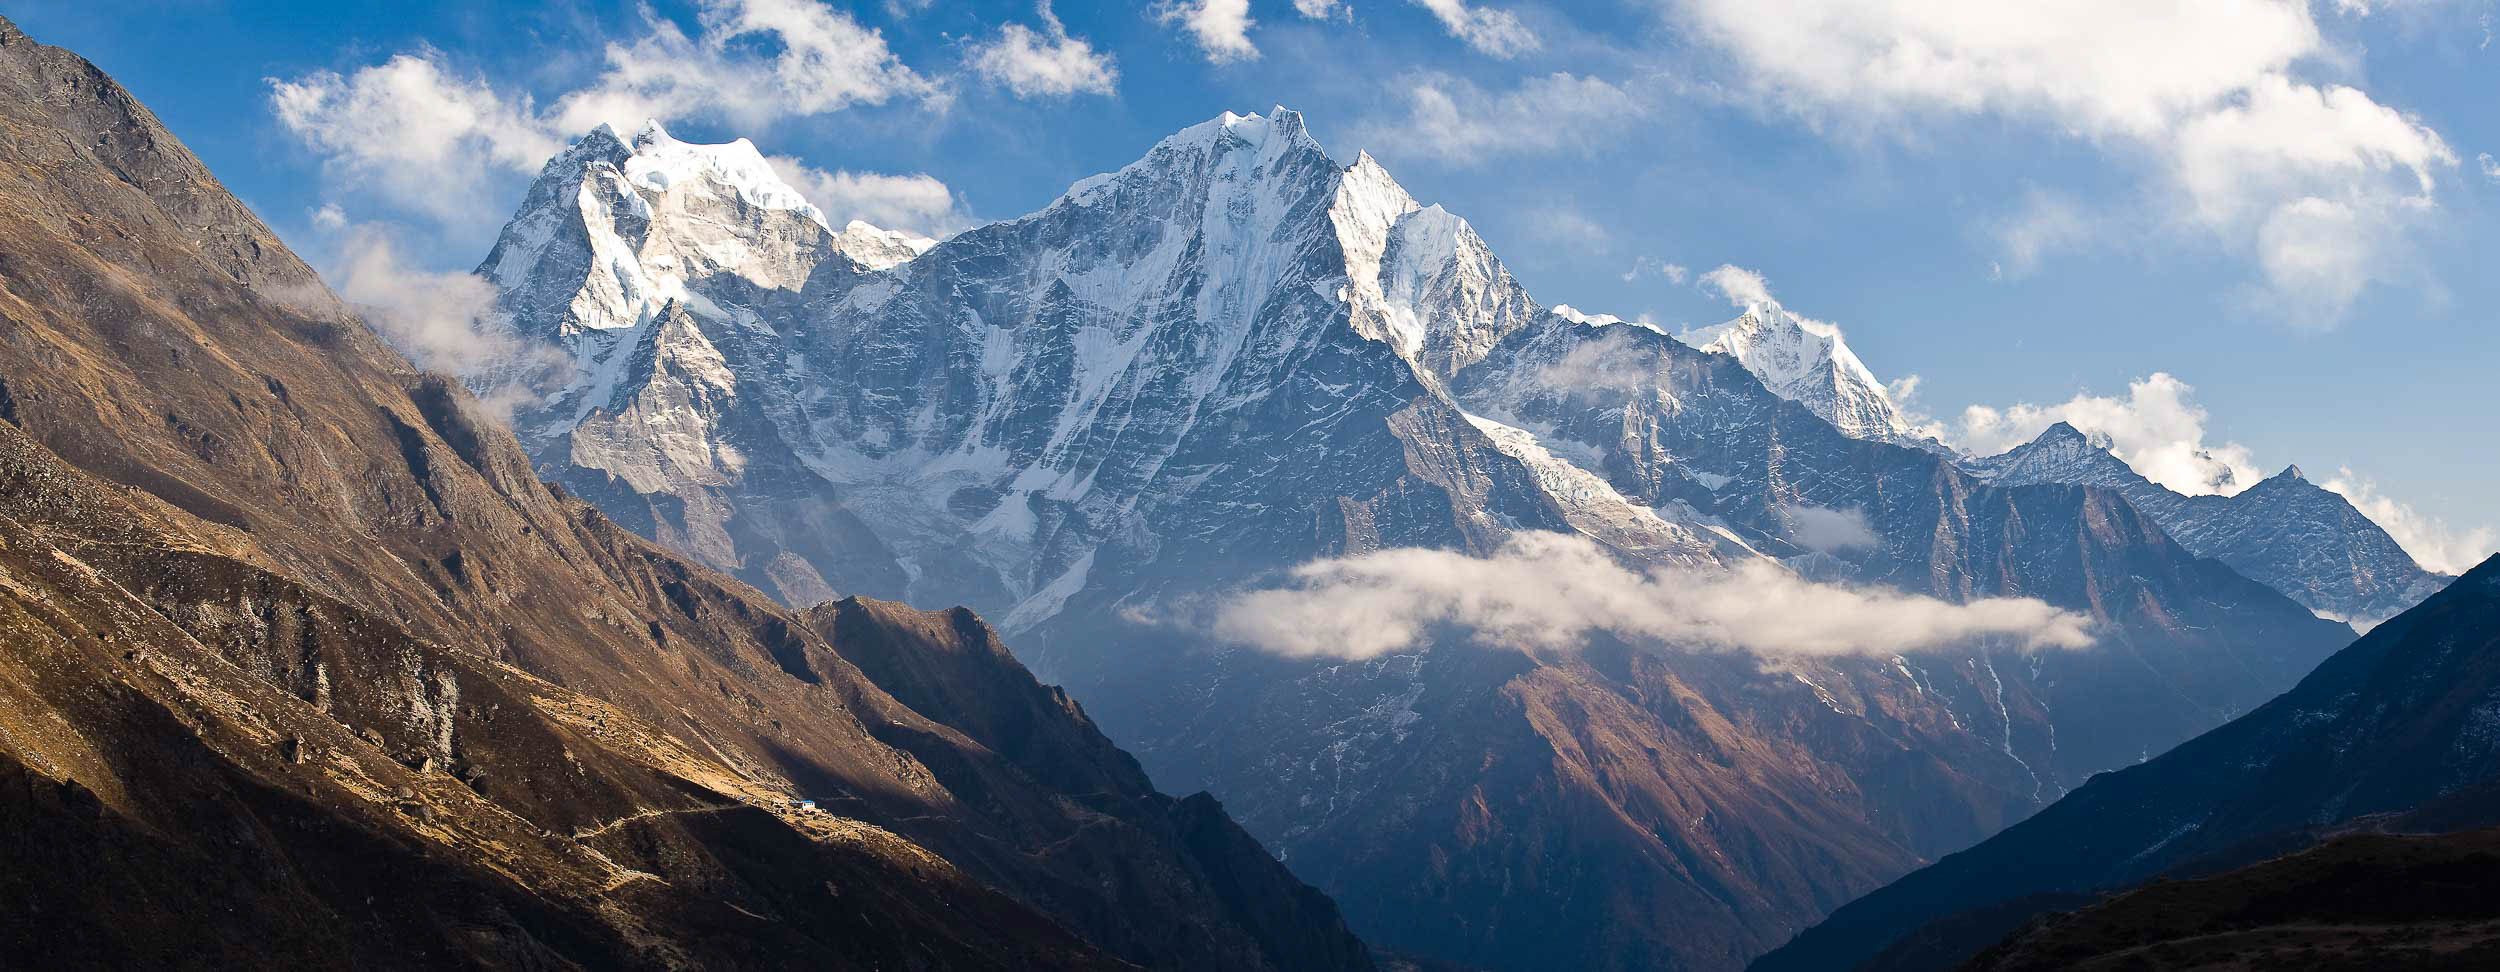 thamserku-peak-mountains-solo-khumbu-region-himalayan-nepal-landscape-panoramic